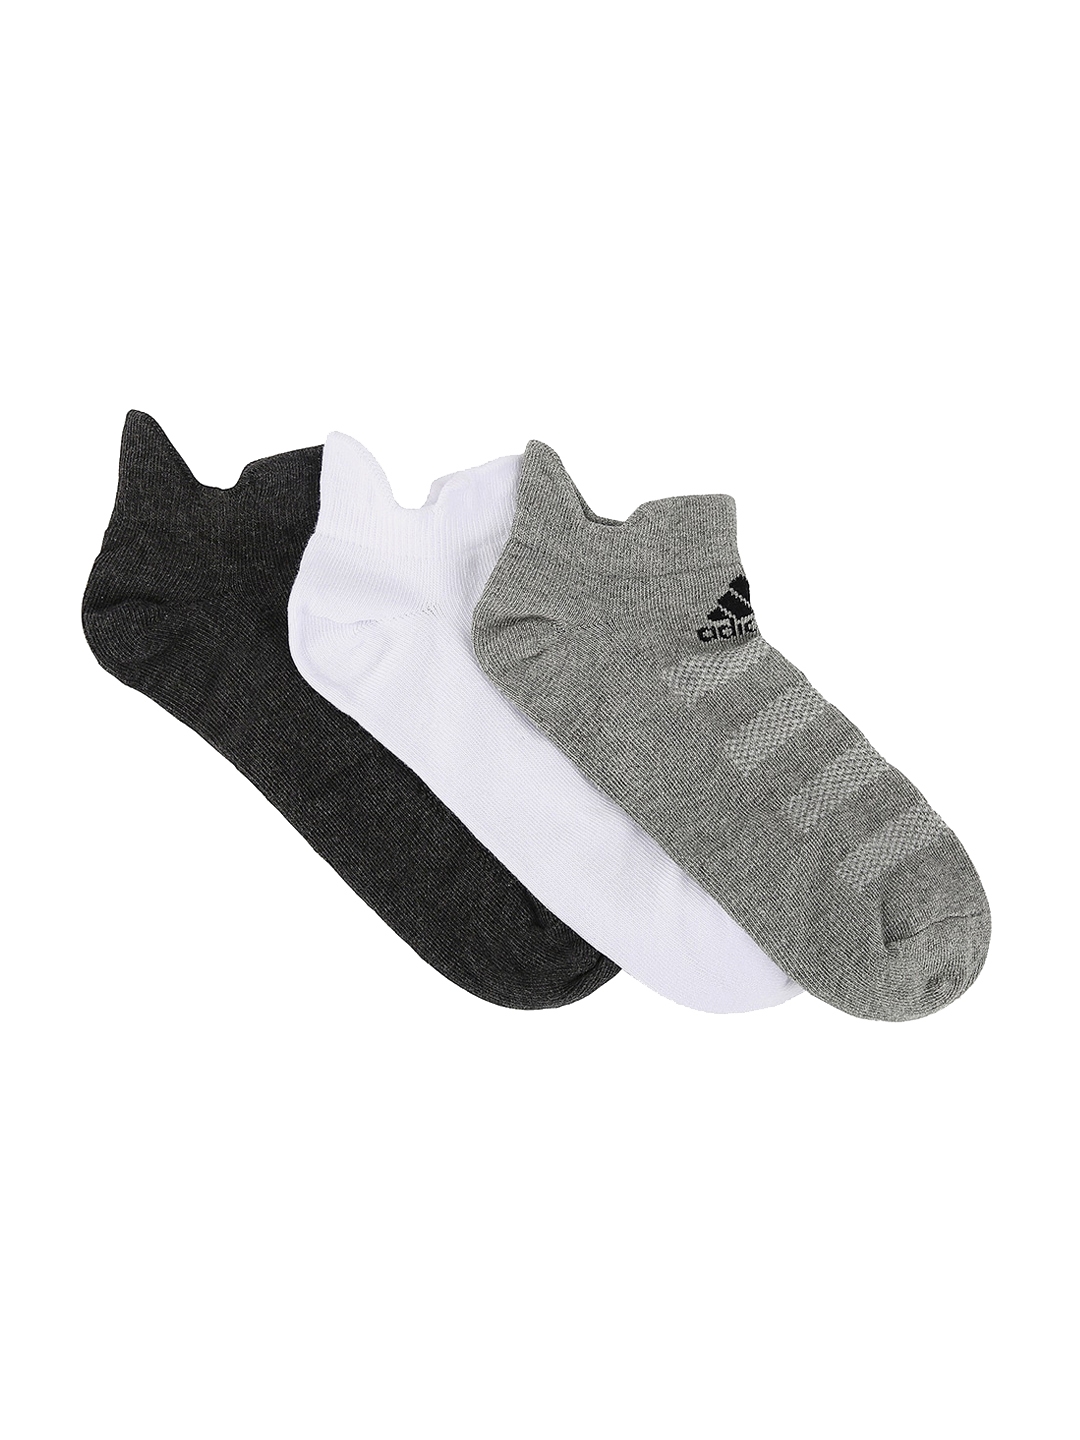 ADIDAS Men Pack of 3 Assorted Ankle Length Socks